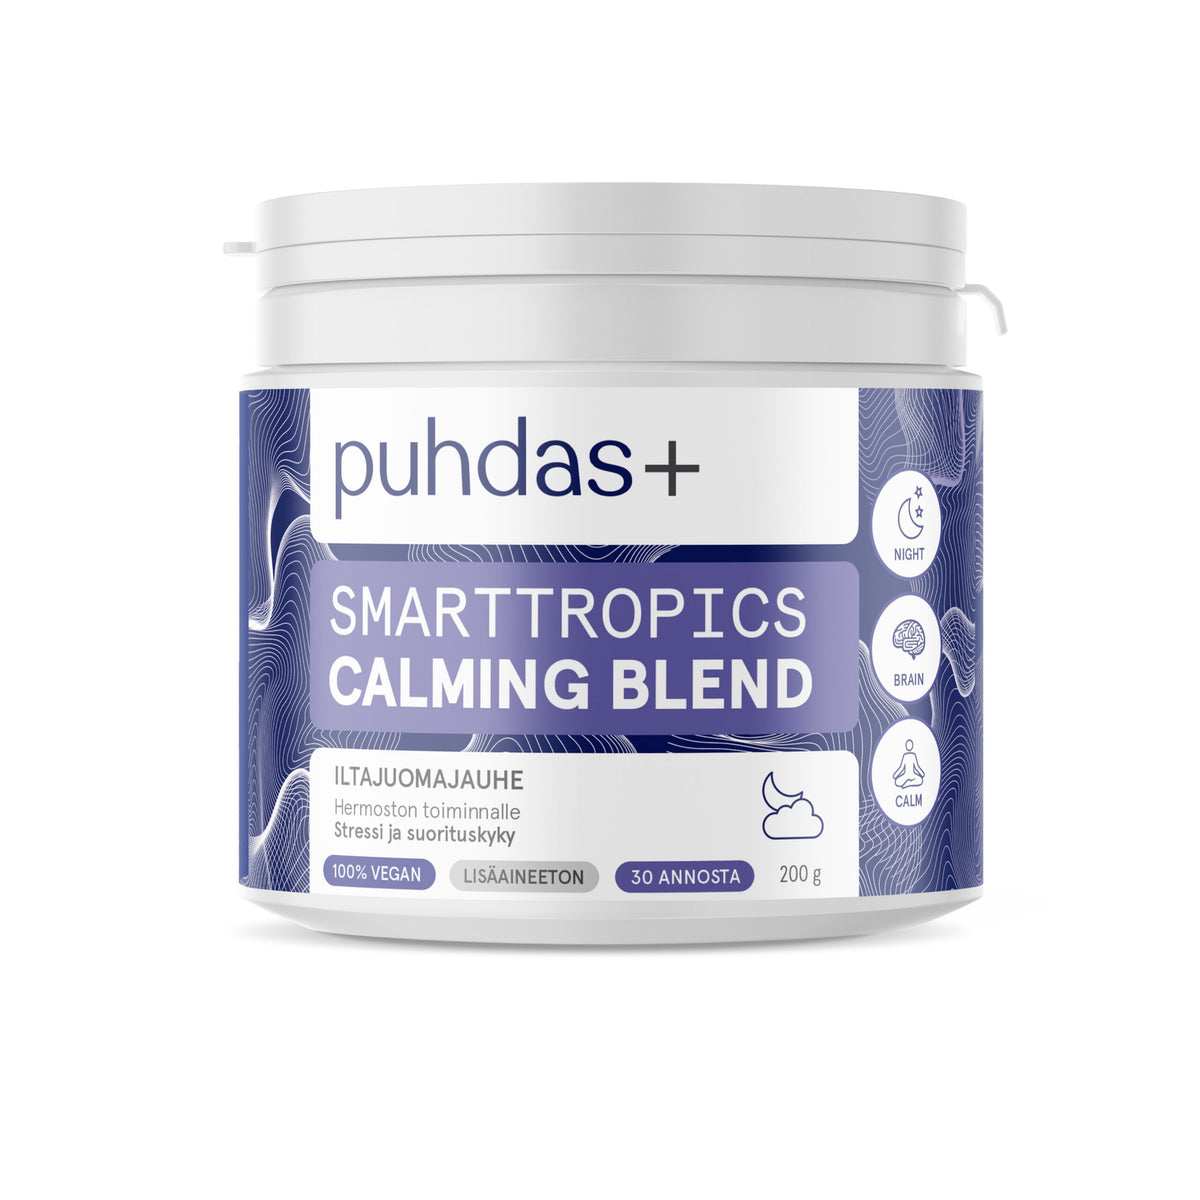 Puhdas+ Smarttropics Calming Blend - Iltajuomajauhe 200 g - Päiväys 08/2024